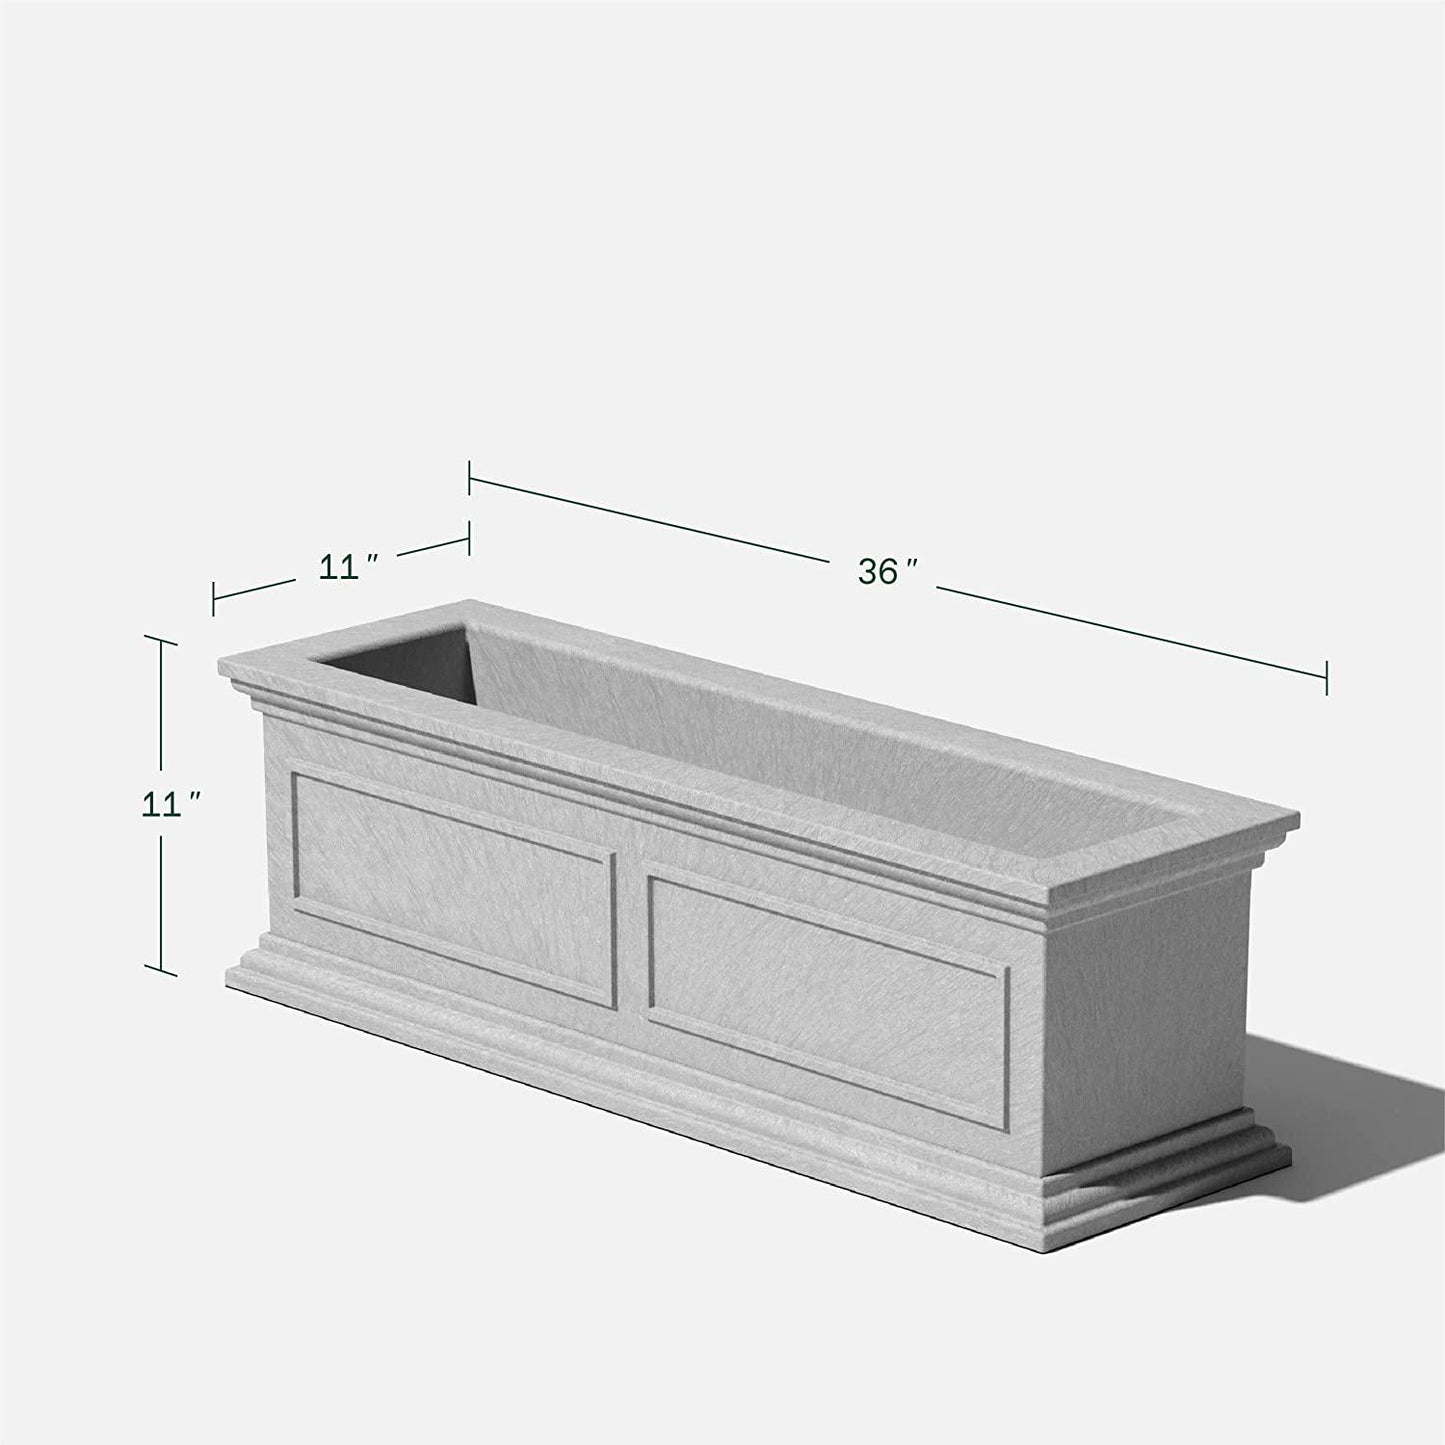 Veradek Brixton Window Box Planter - 2 Pack (36 inch, Gray)